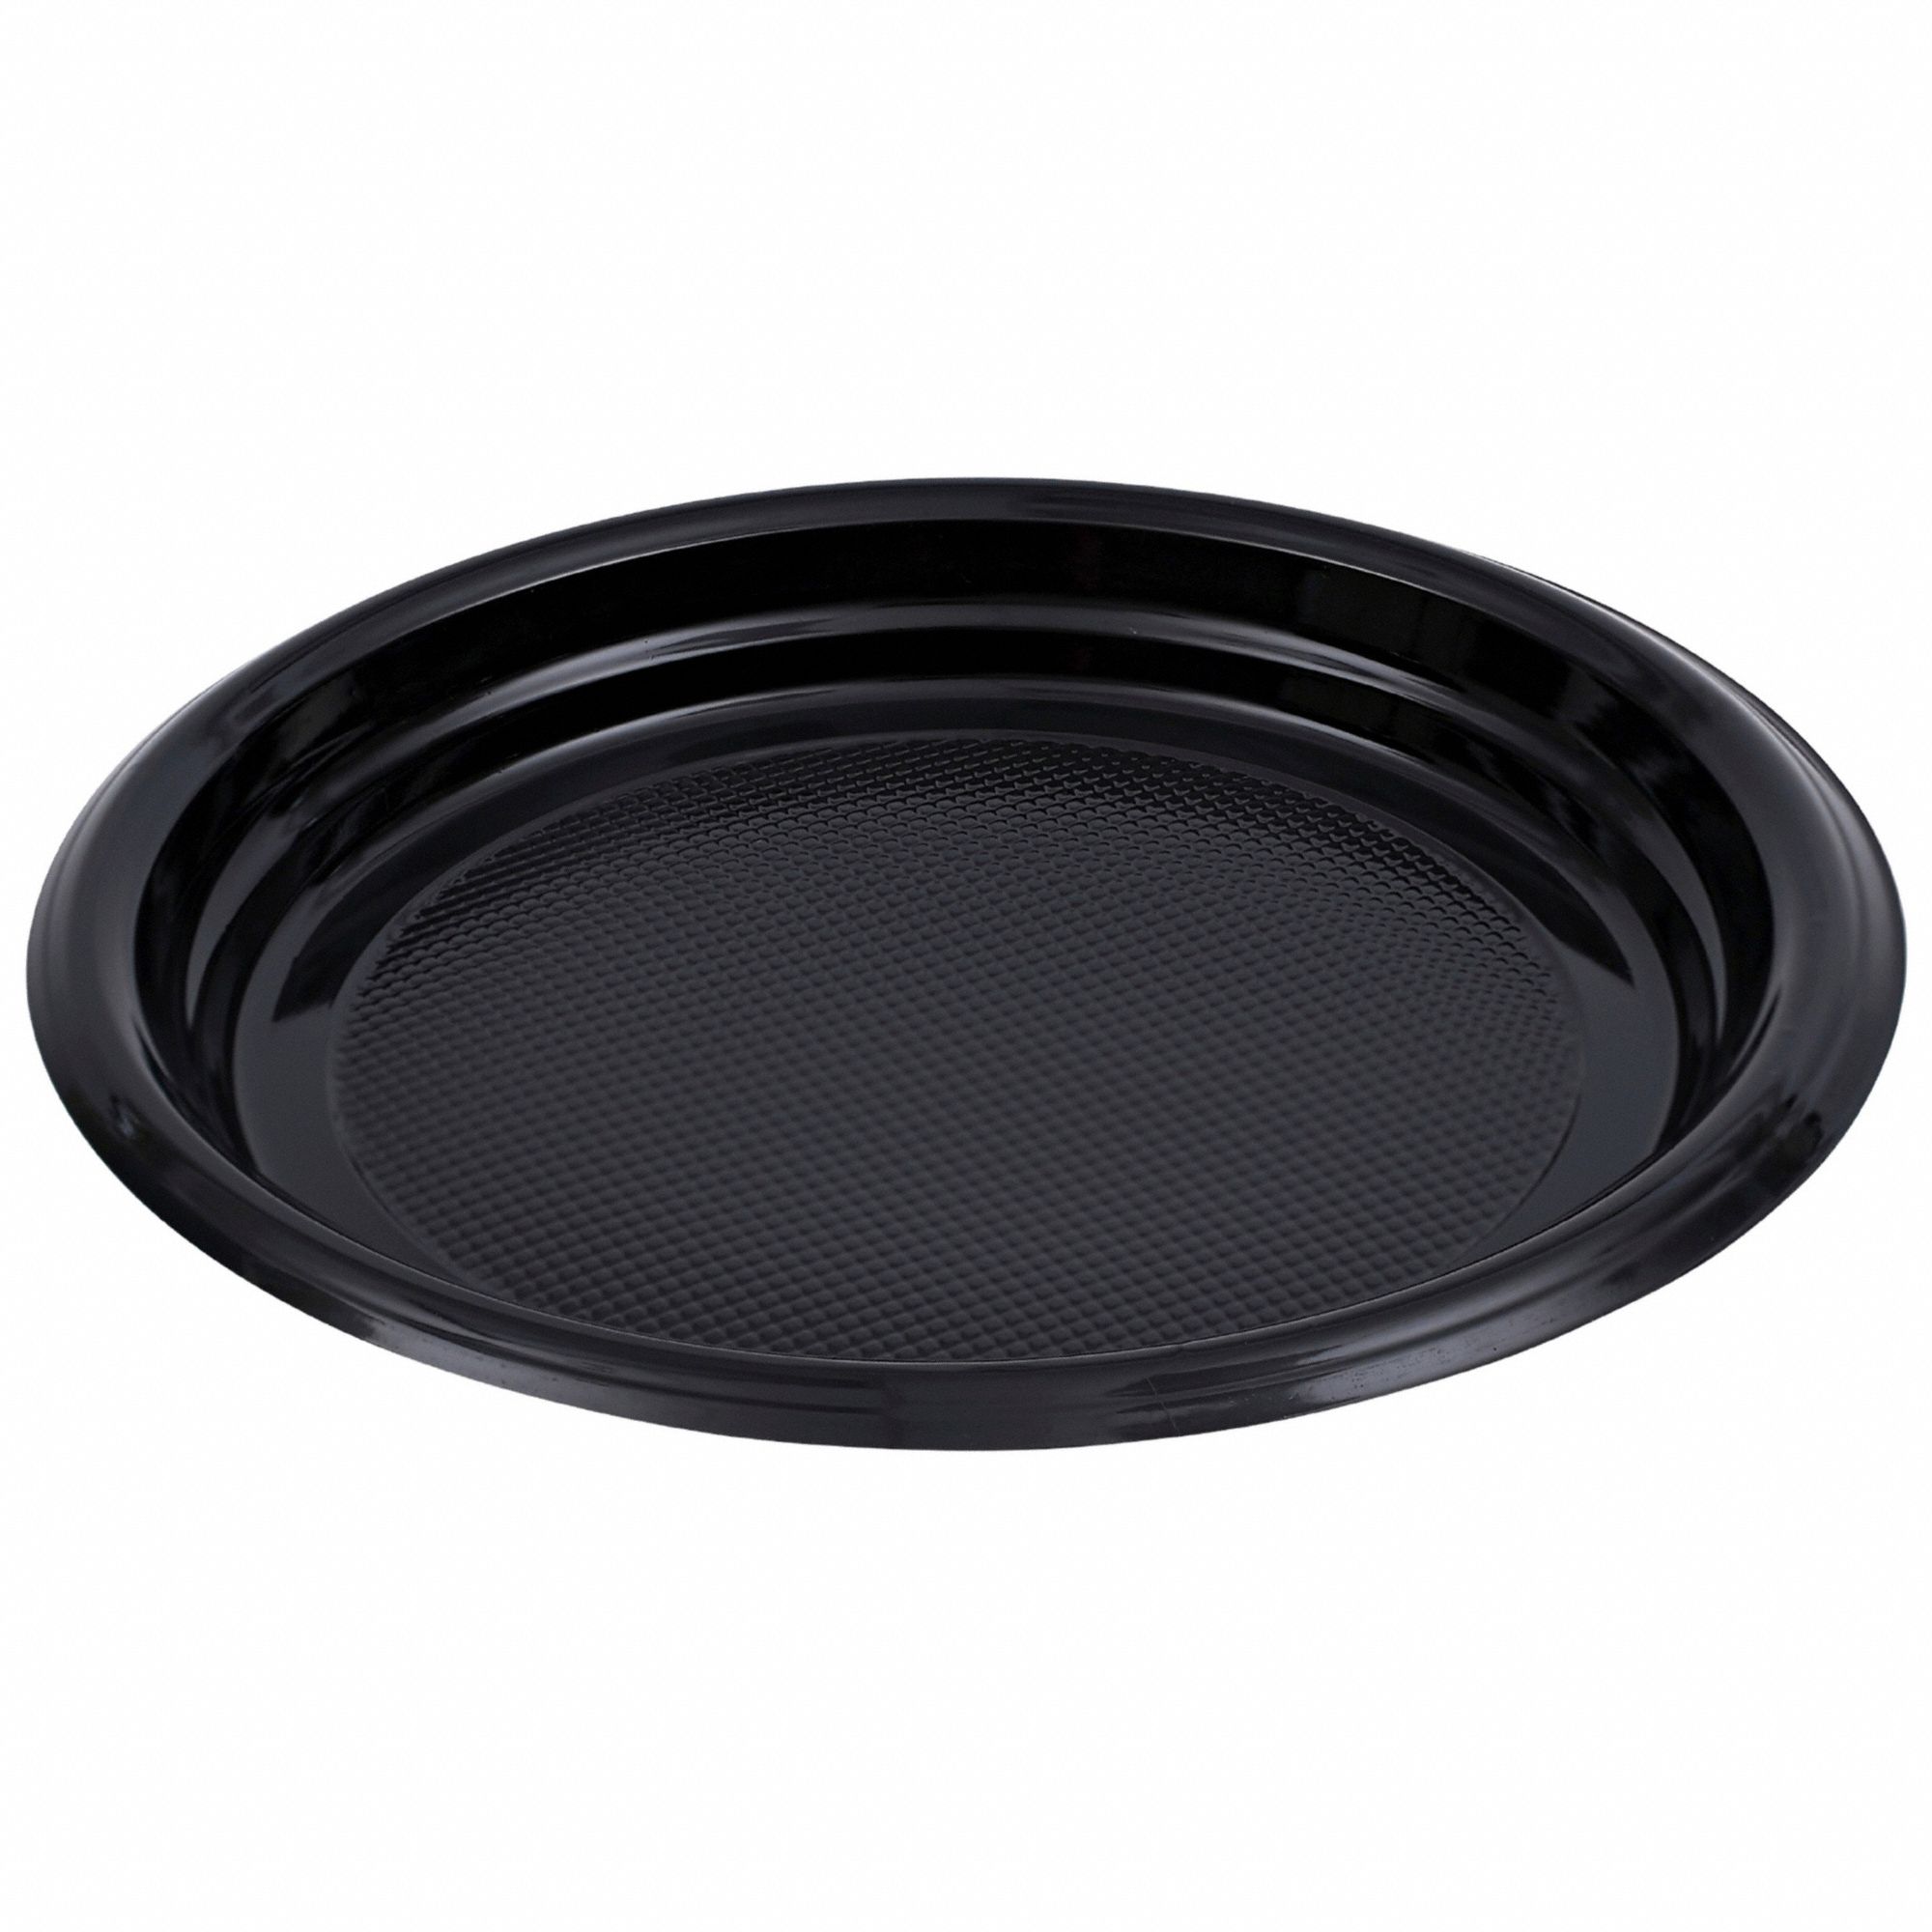 Disposable Plastic Plate: Black, Medium-Wt, 9 in Disposable Plate Size, 500 PK